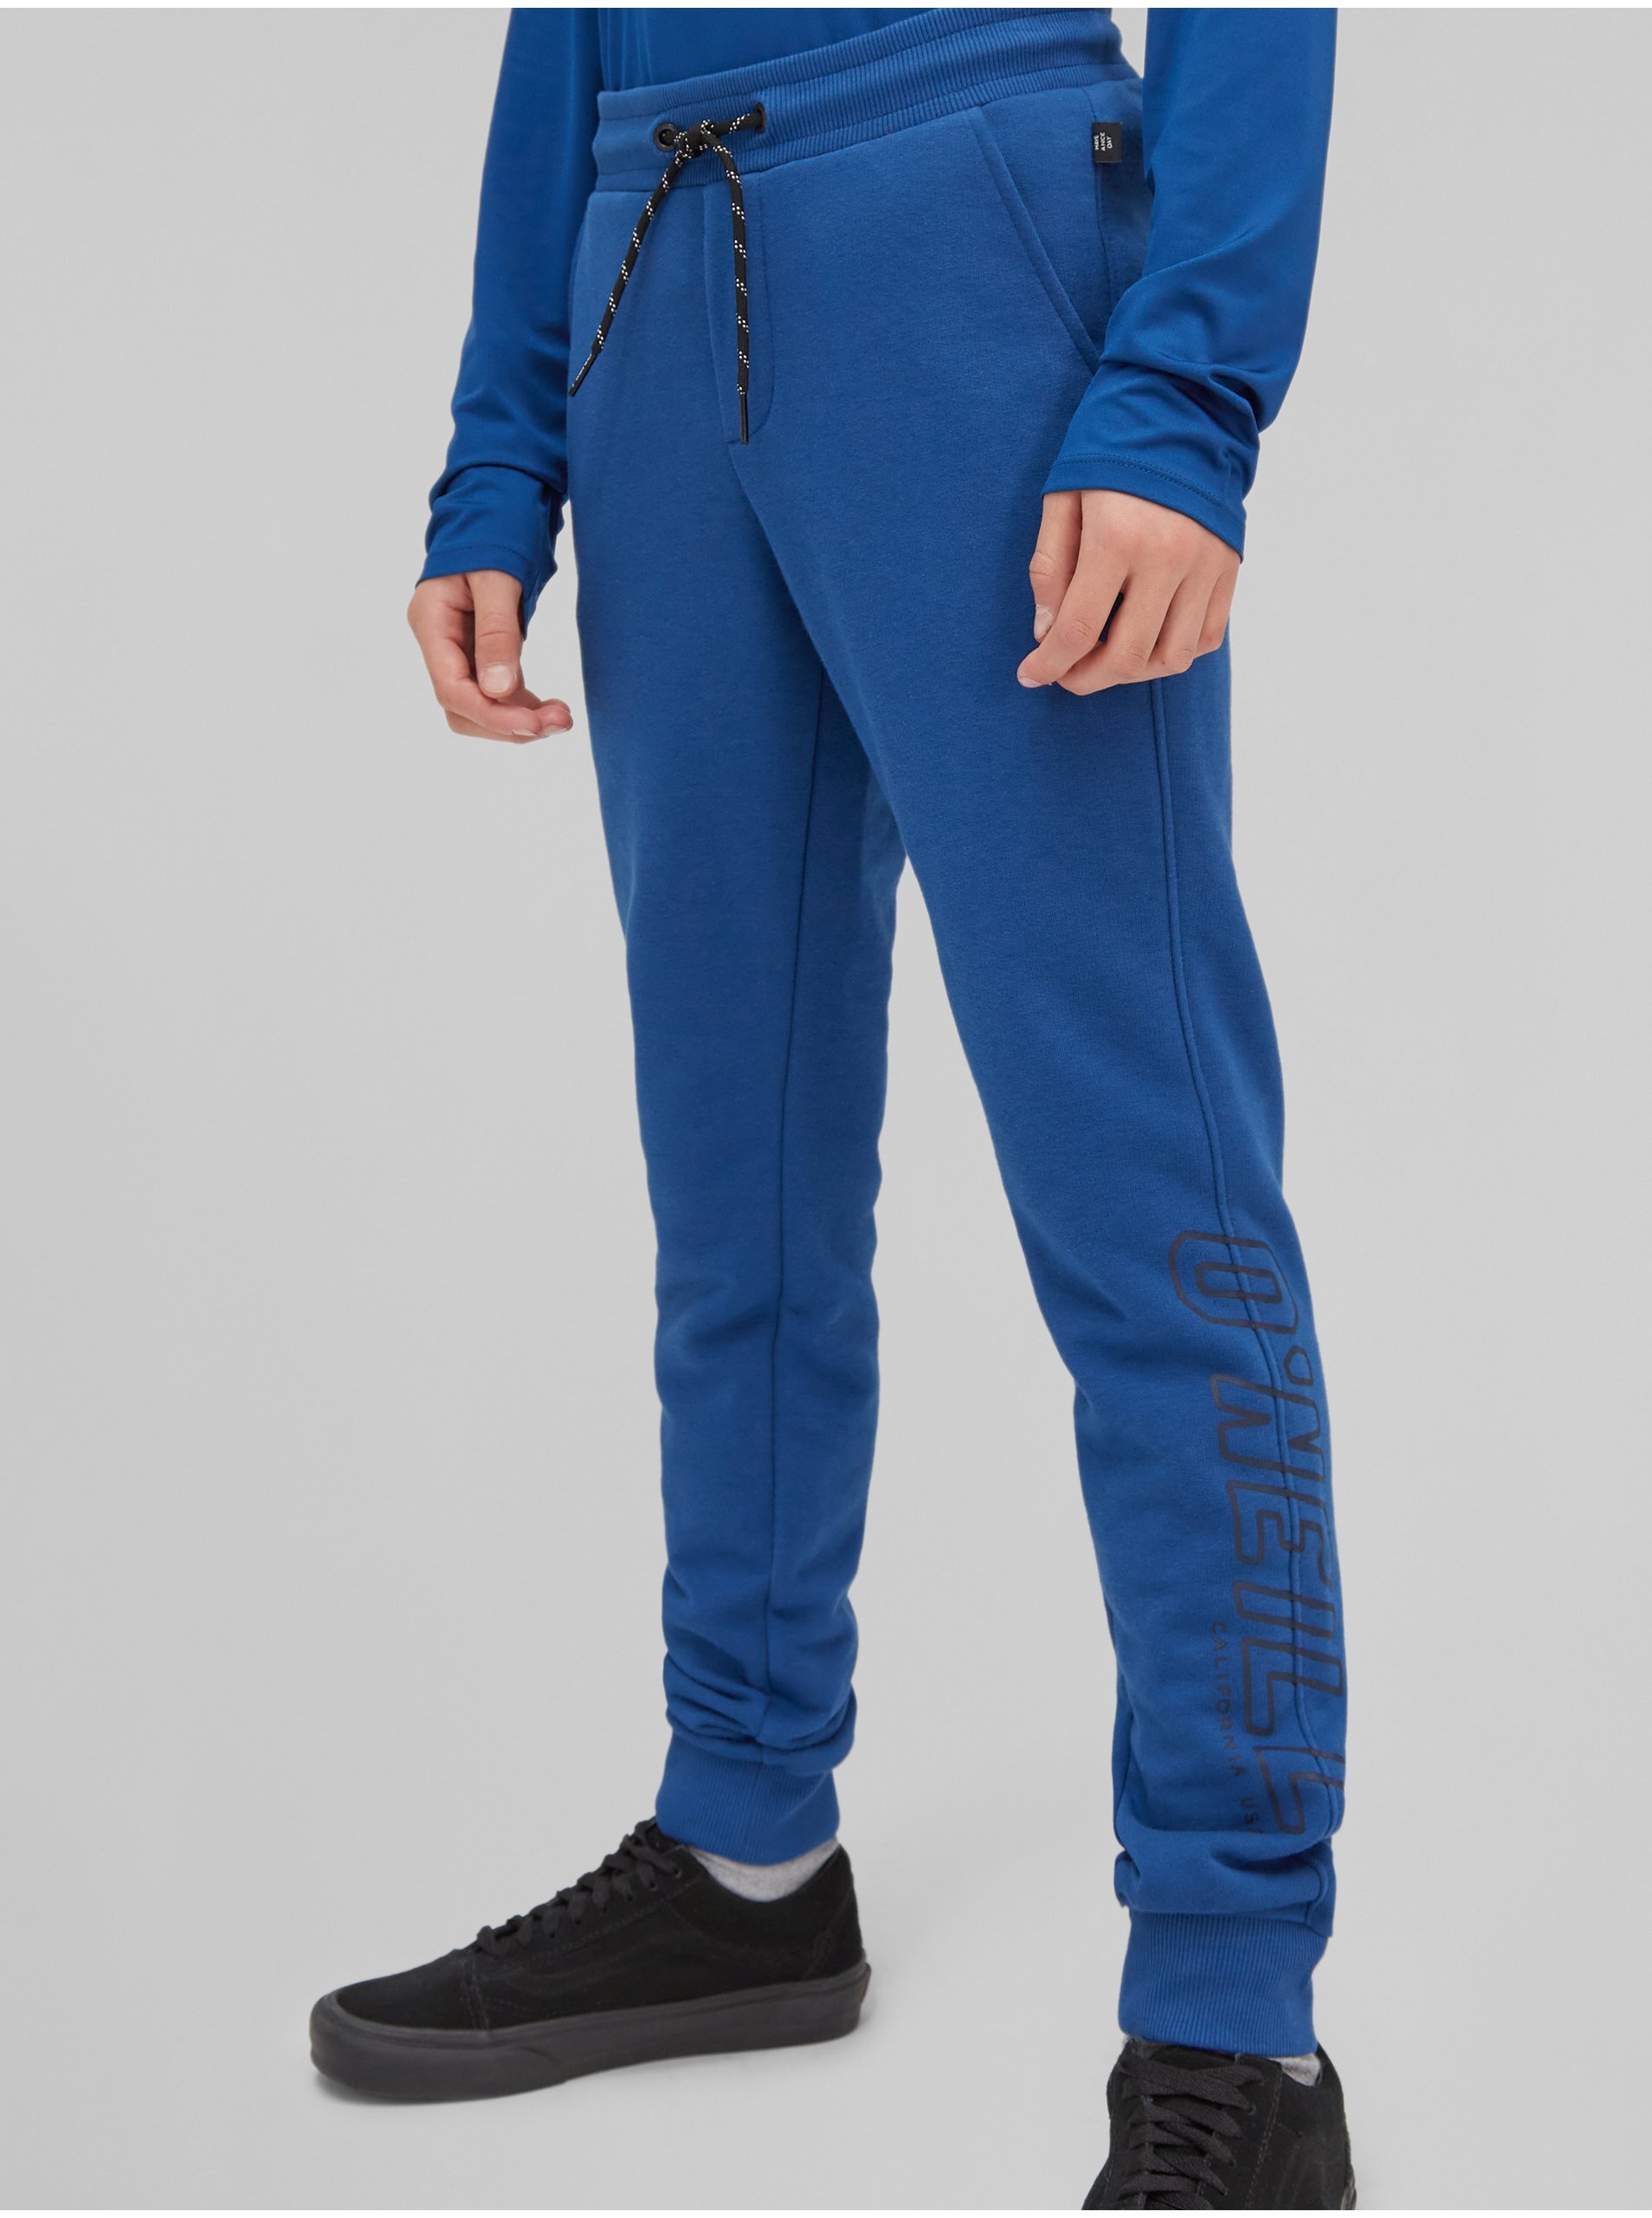 Lacno Modré chlapčenské tepláky s nápisom O'Neill All Year Jogger Pants